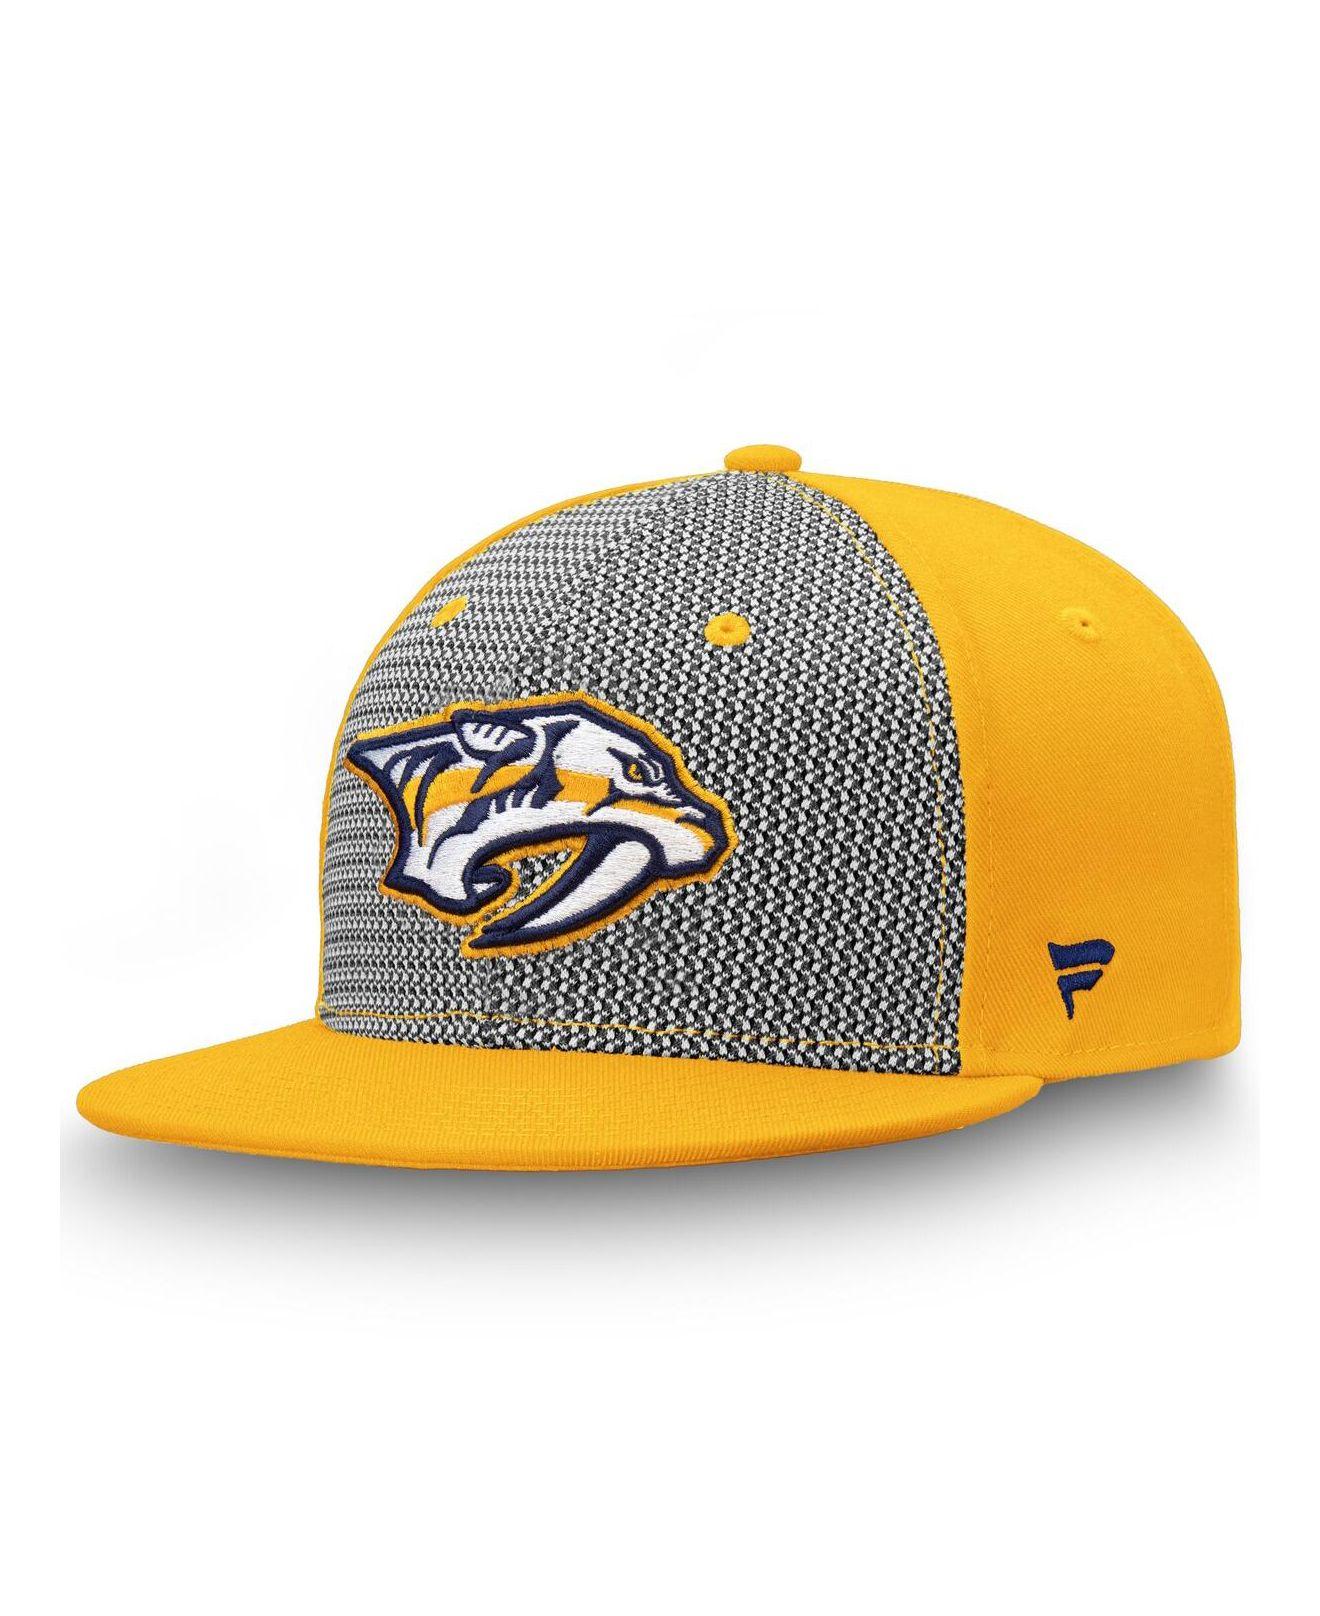 Nashville Predators Fanatics Branded Authentic Pro Rink Flex Hat